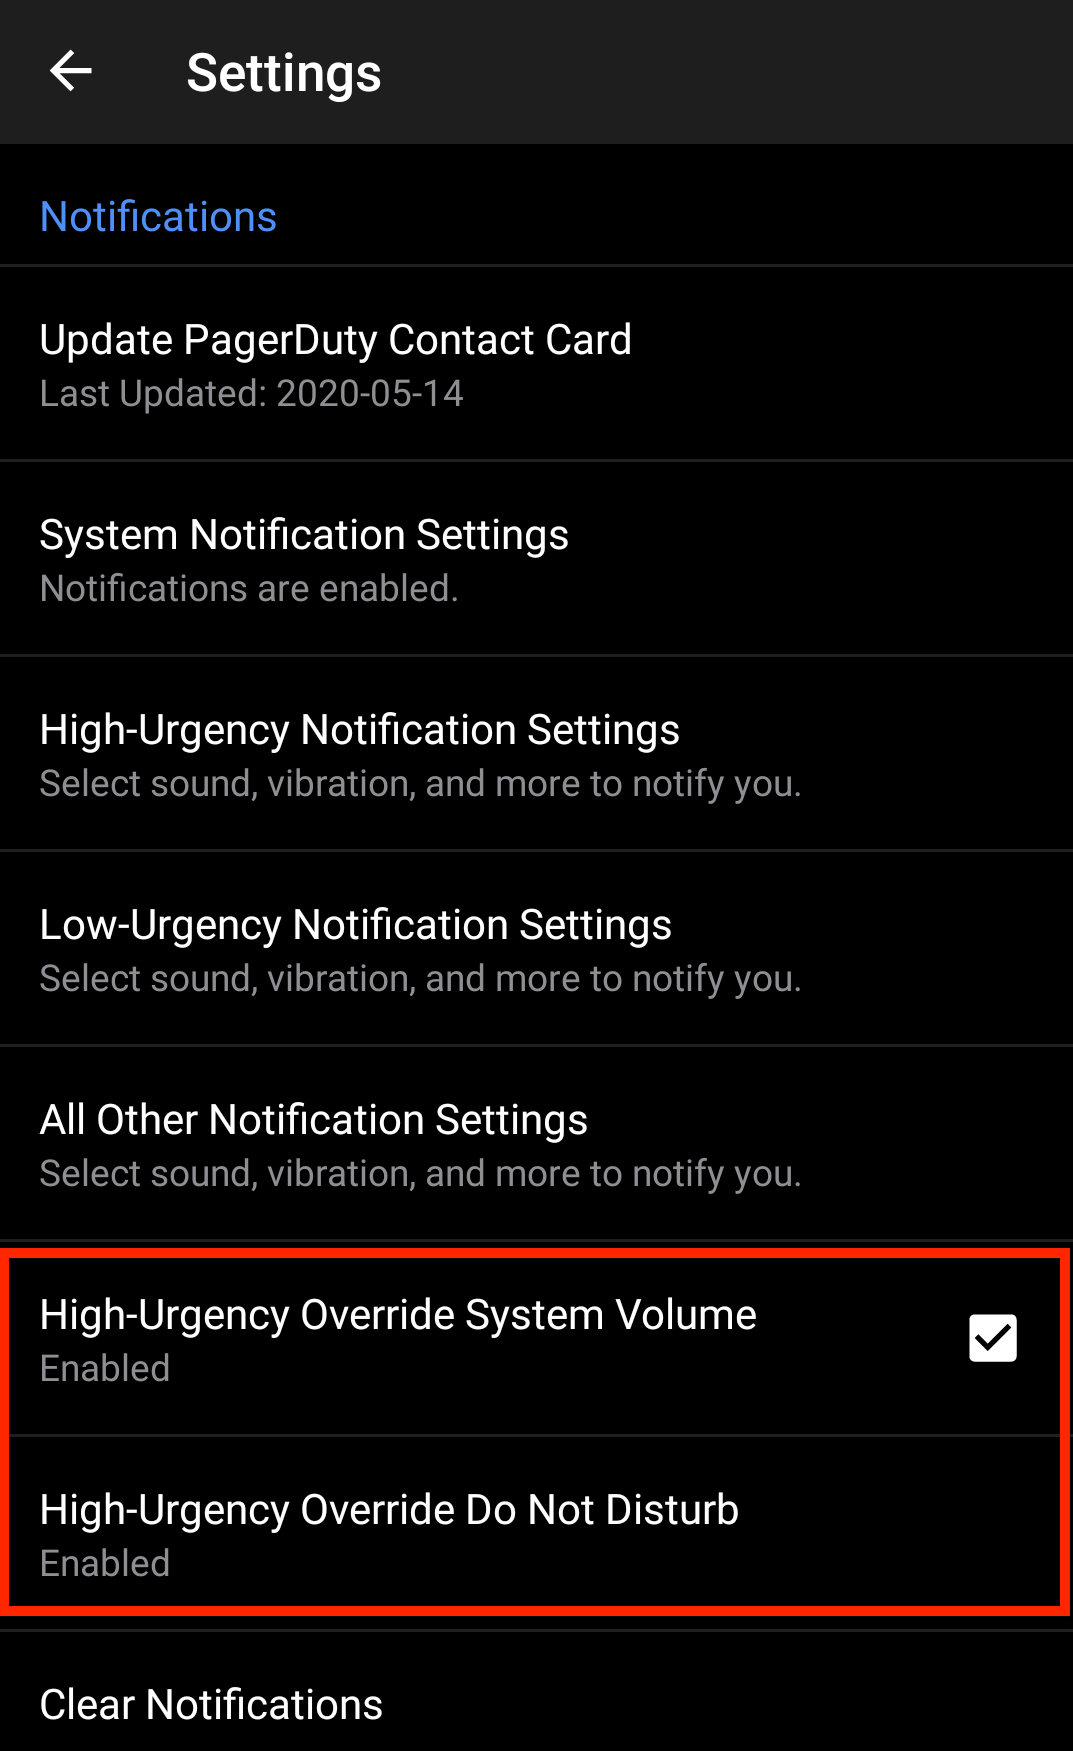 High-Urgency Override settings